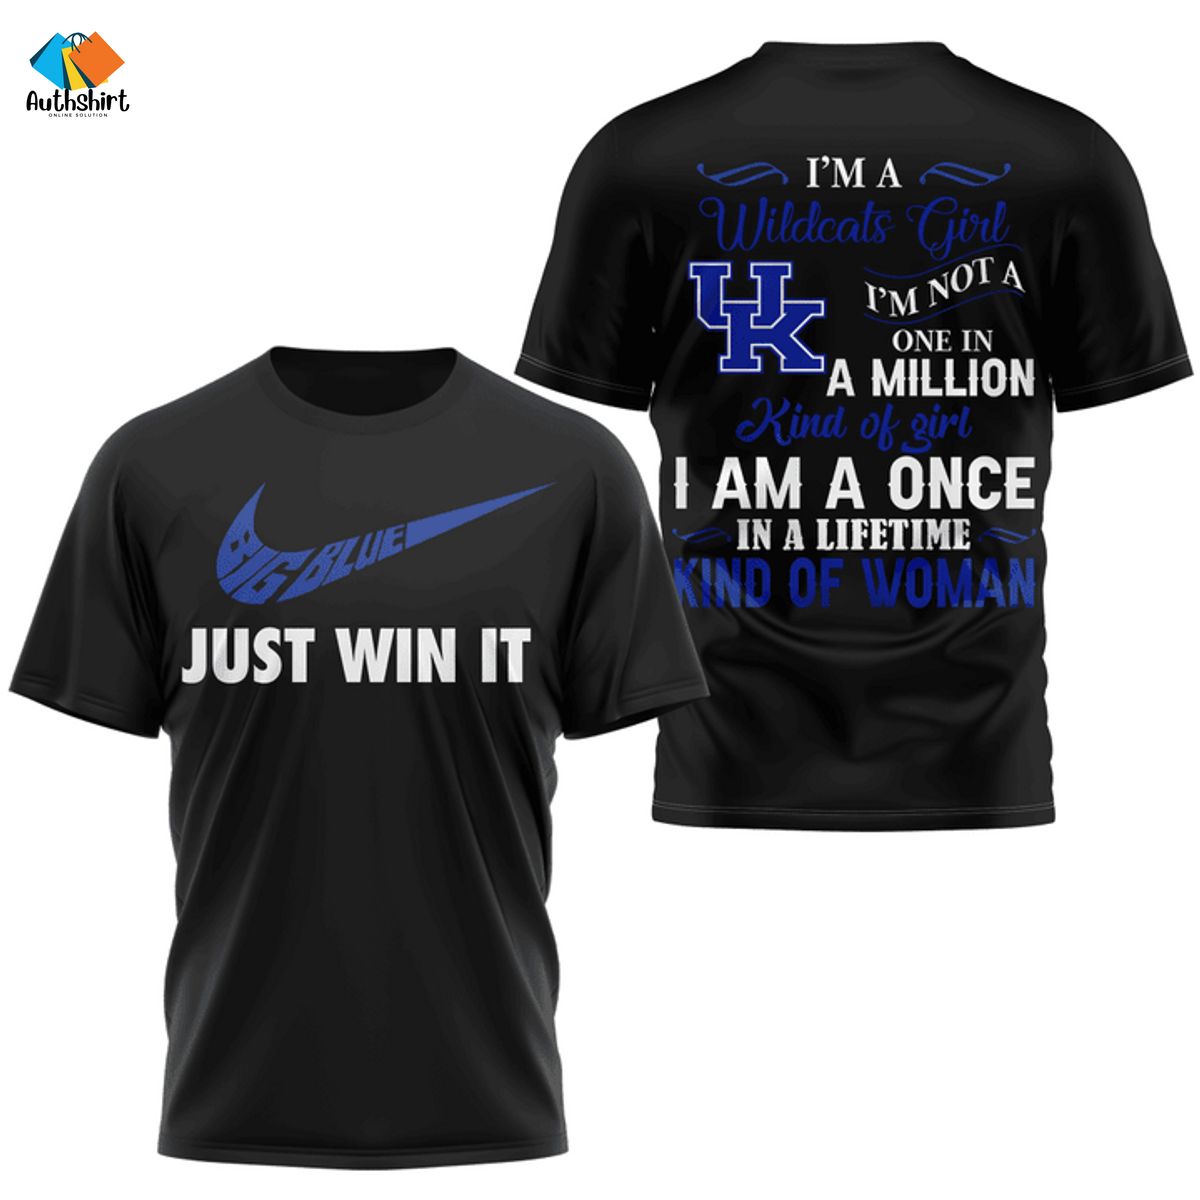 UK Kentucky Wildcats Girl Big Blue One In A Million Just Win It Nike Tshirt